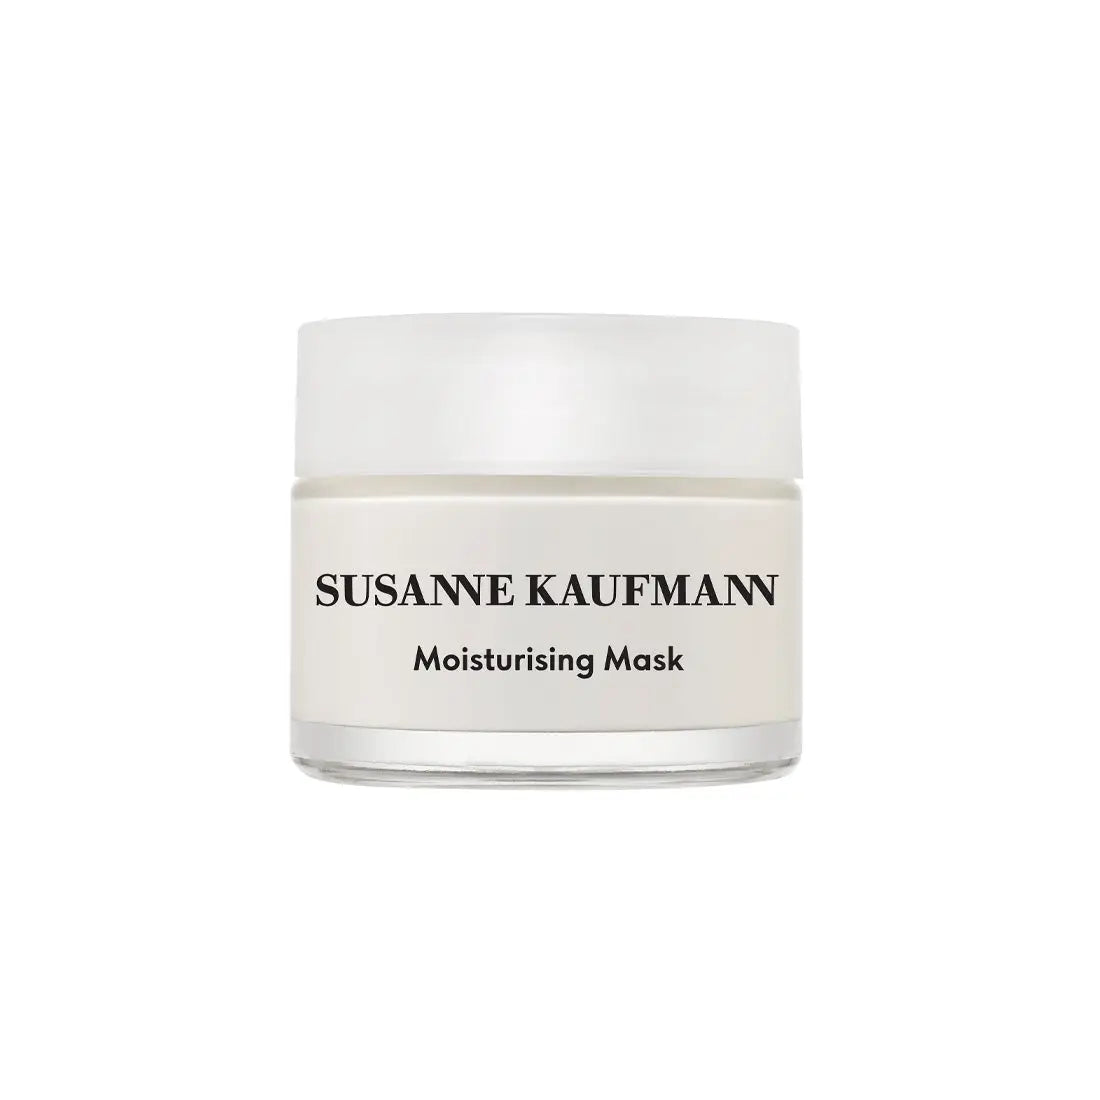 Susanne Kaufmann Moisturising Mask 50ml - Free Shipping 